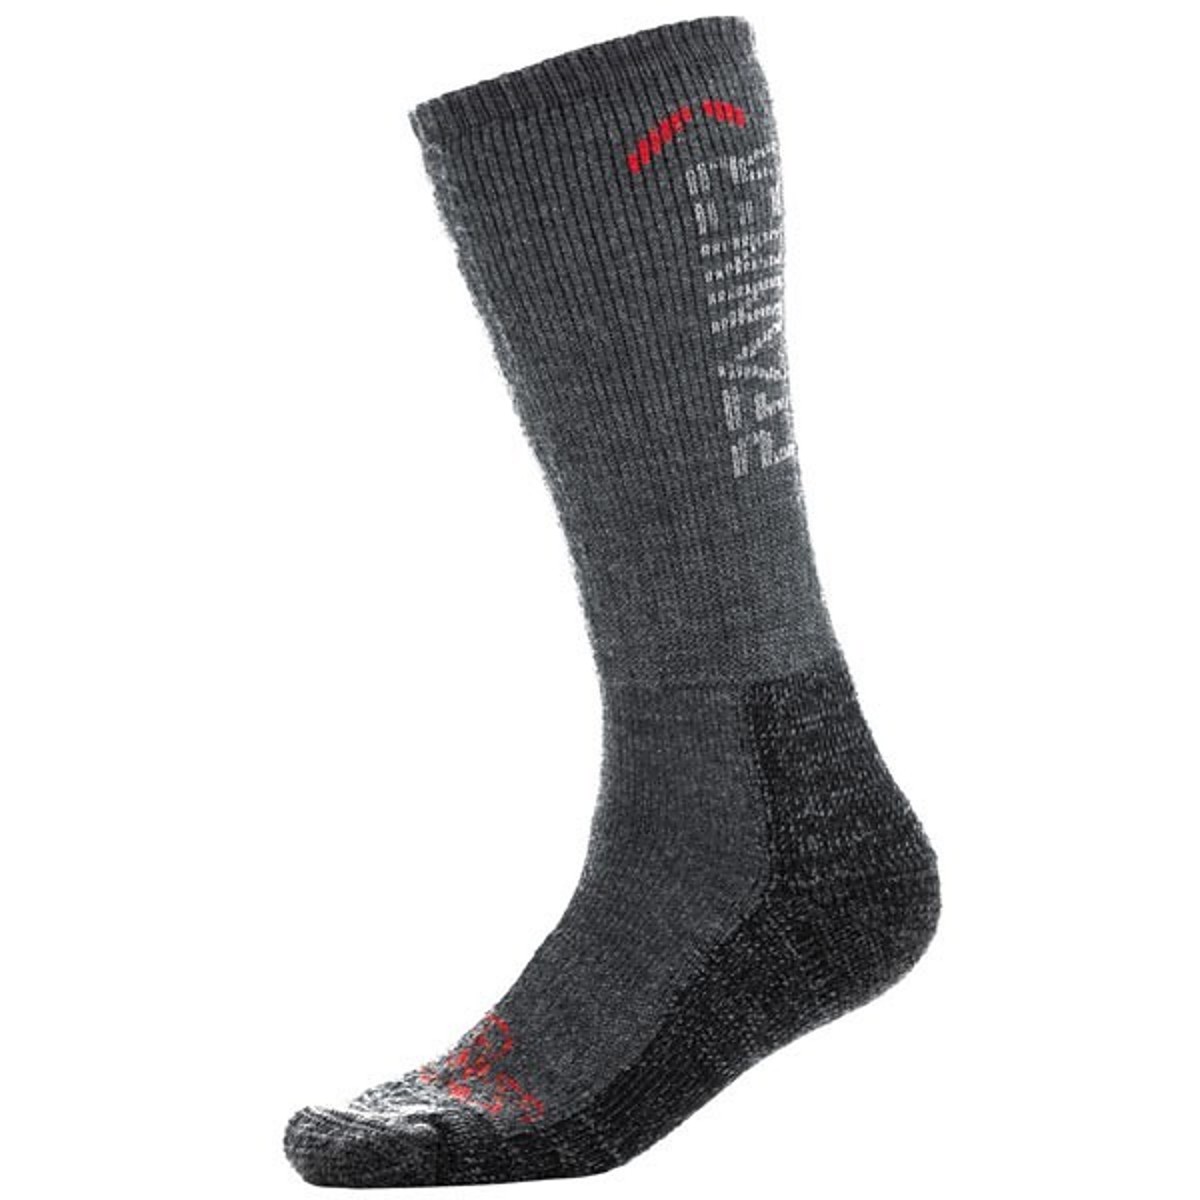 Pfanner Merino thermal socks